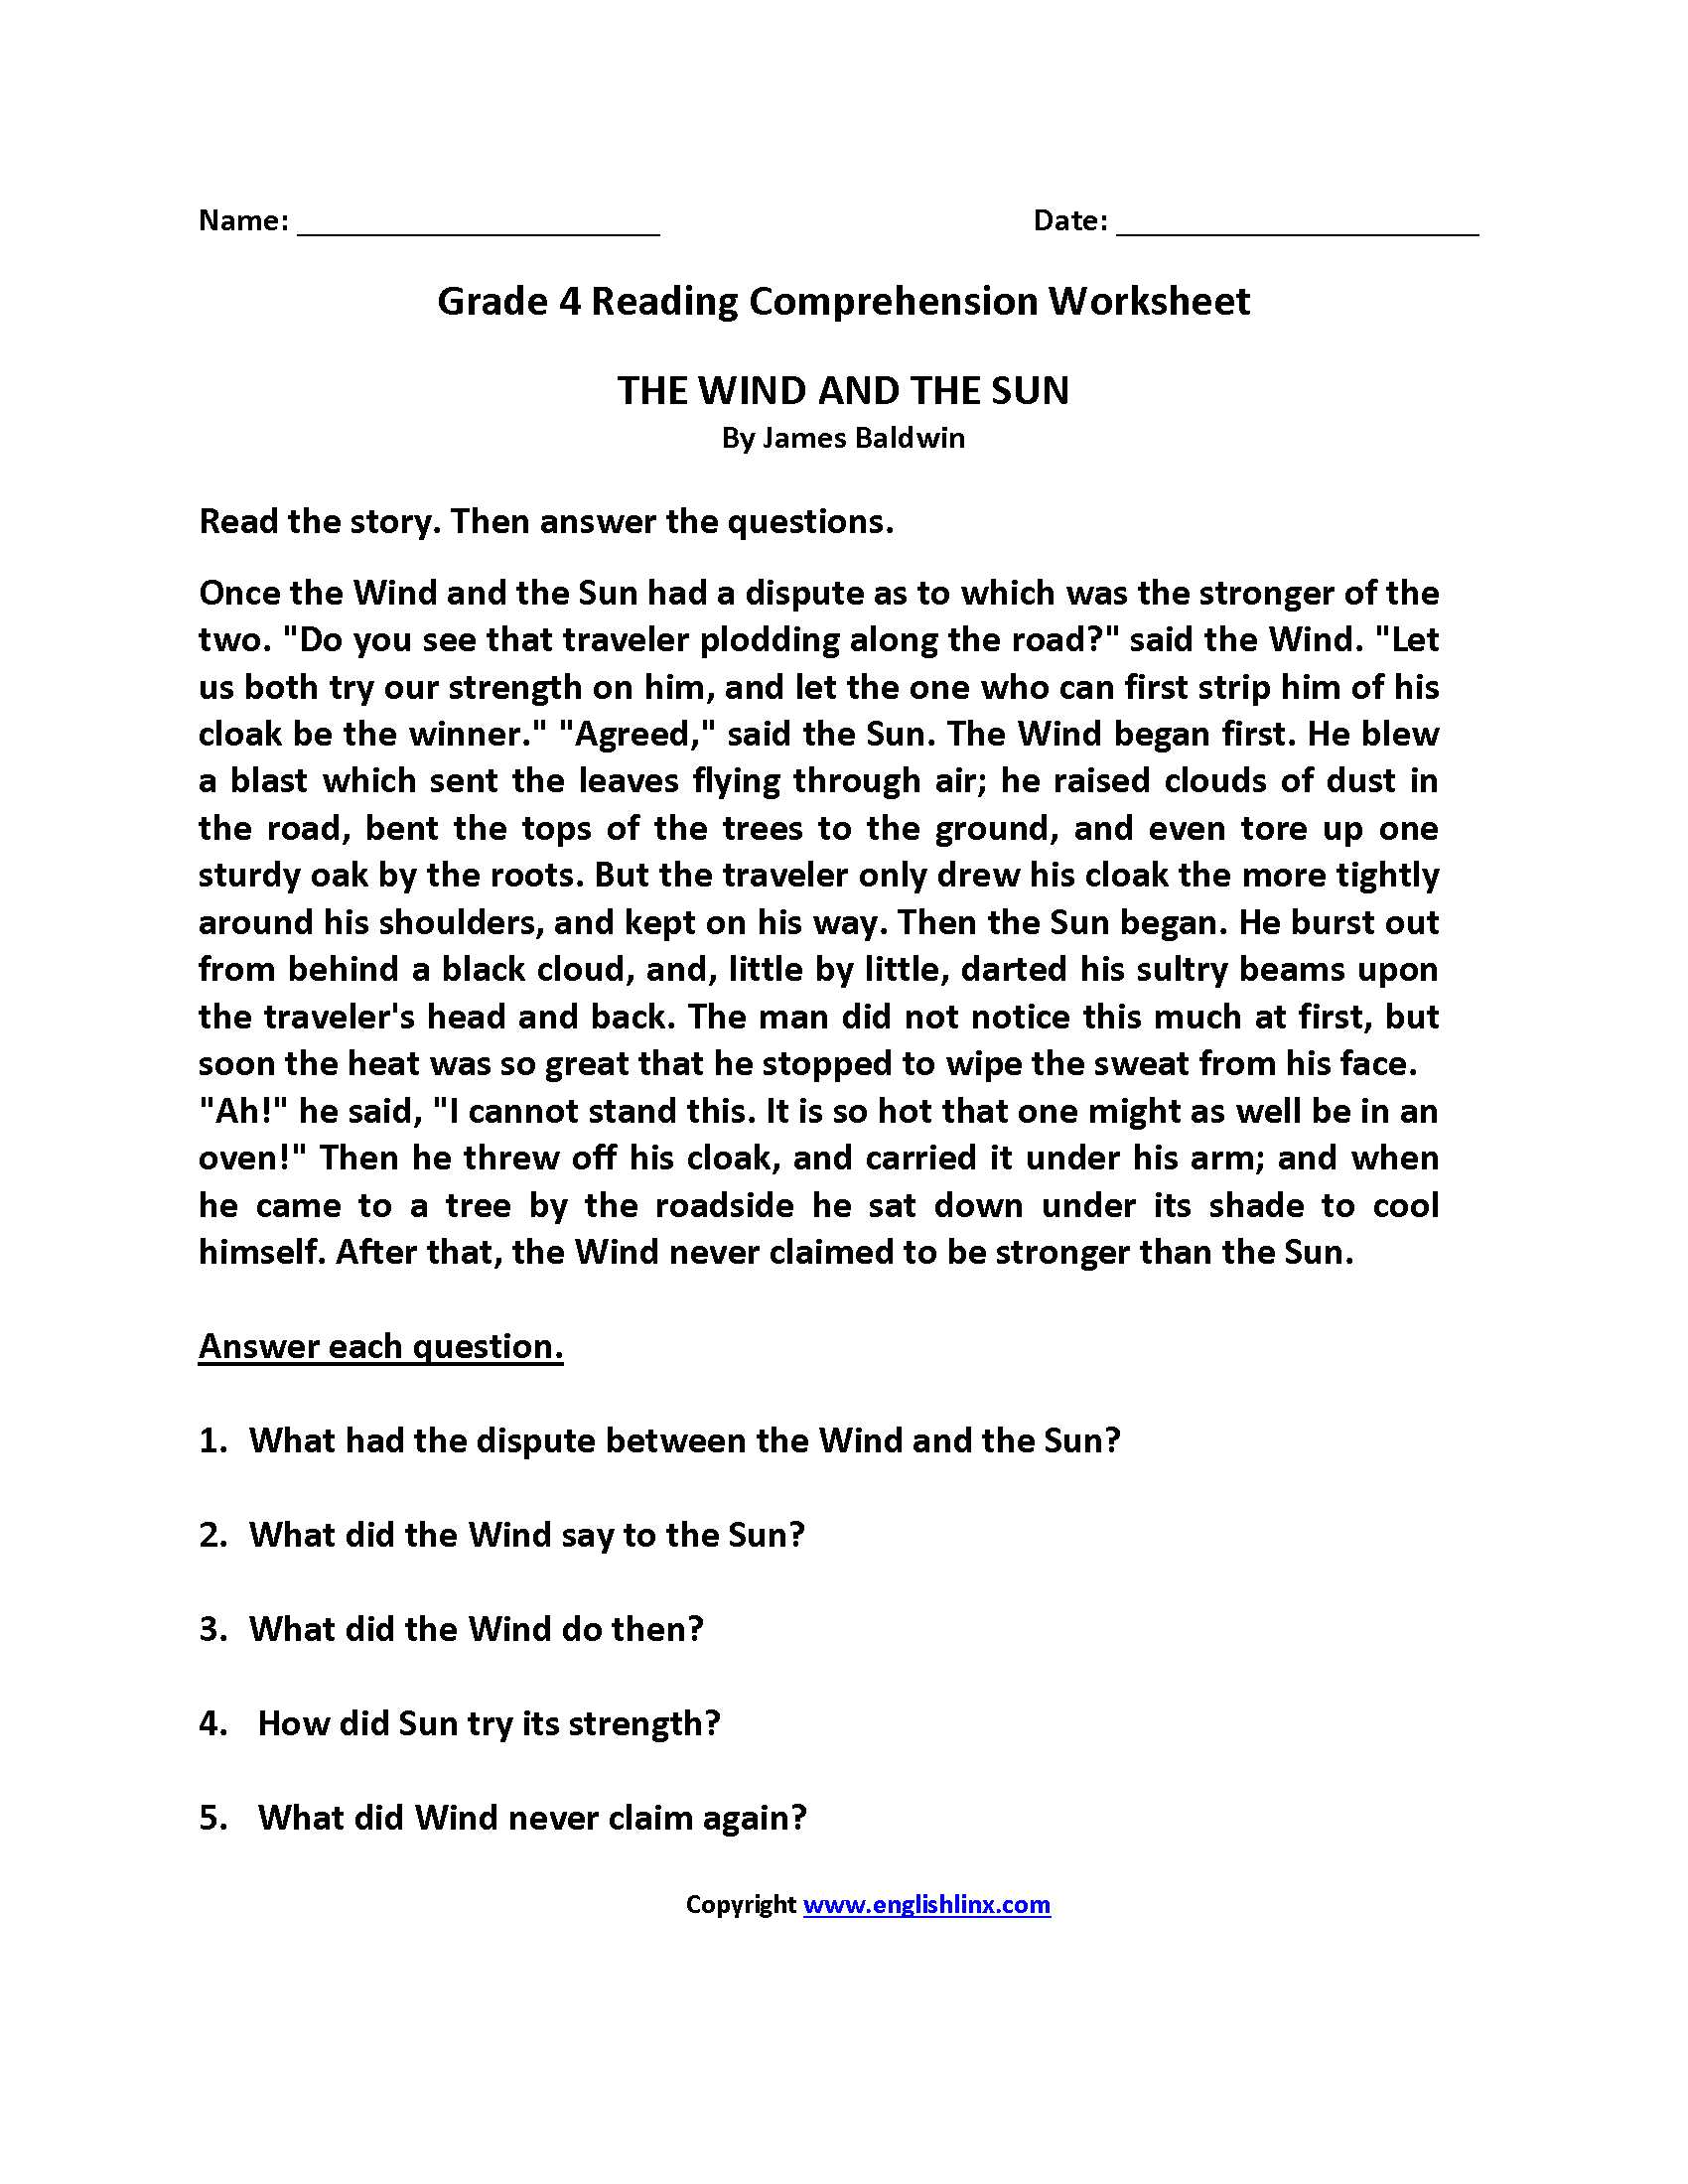 Grade 3 Reading Comprehension Worksheets Pdf together with Prehension Worksheet Grade 4 the Best Worksheets Image Collection